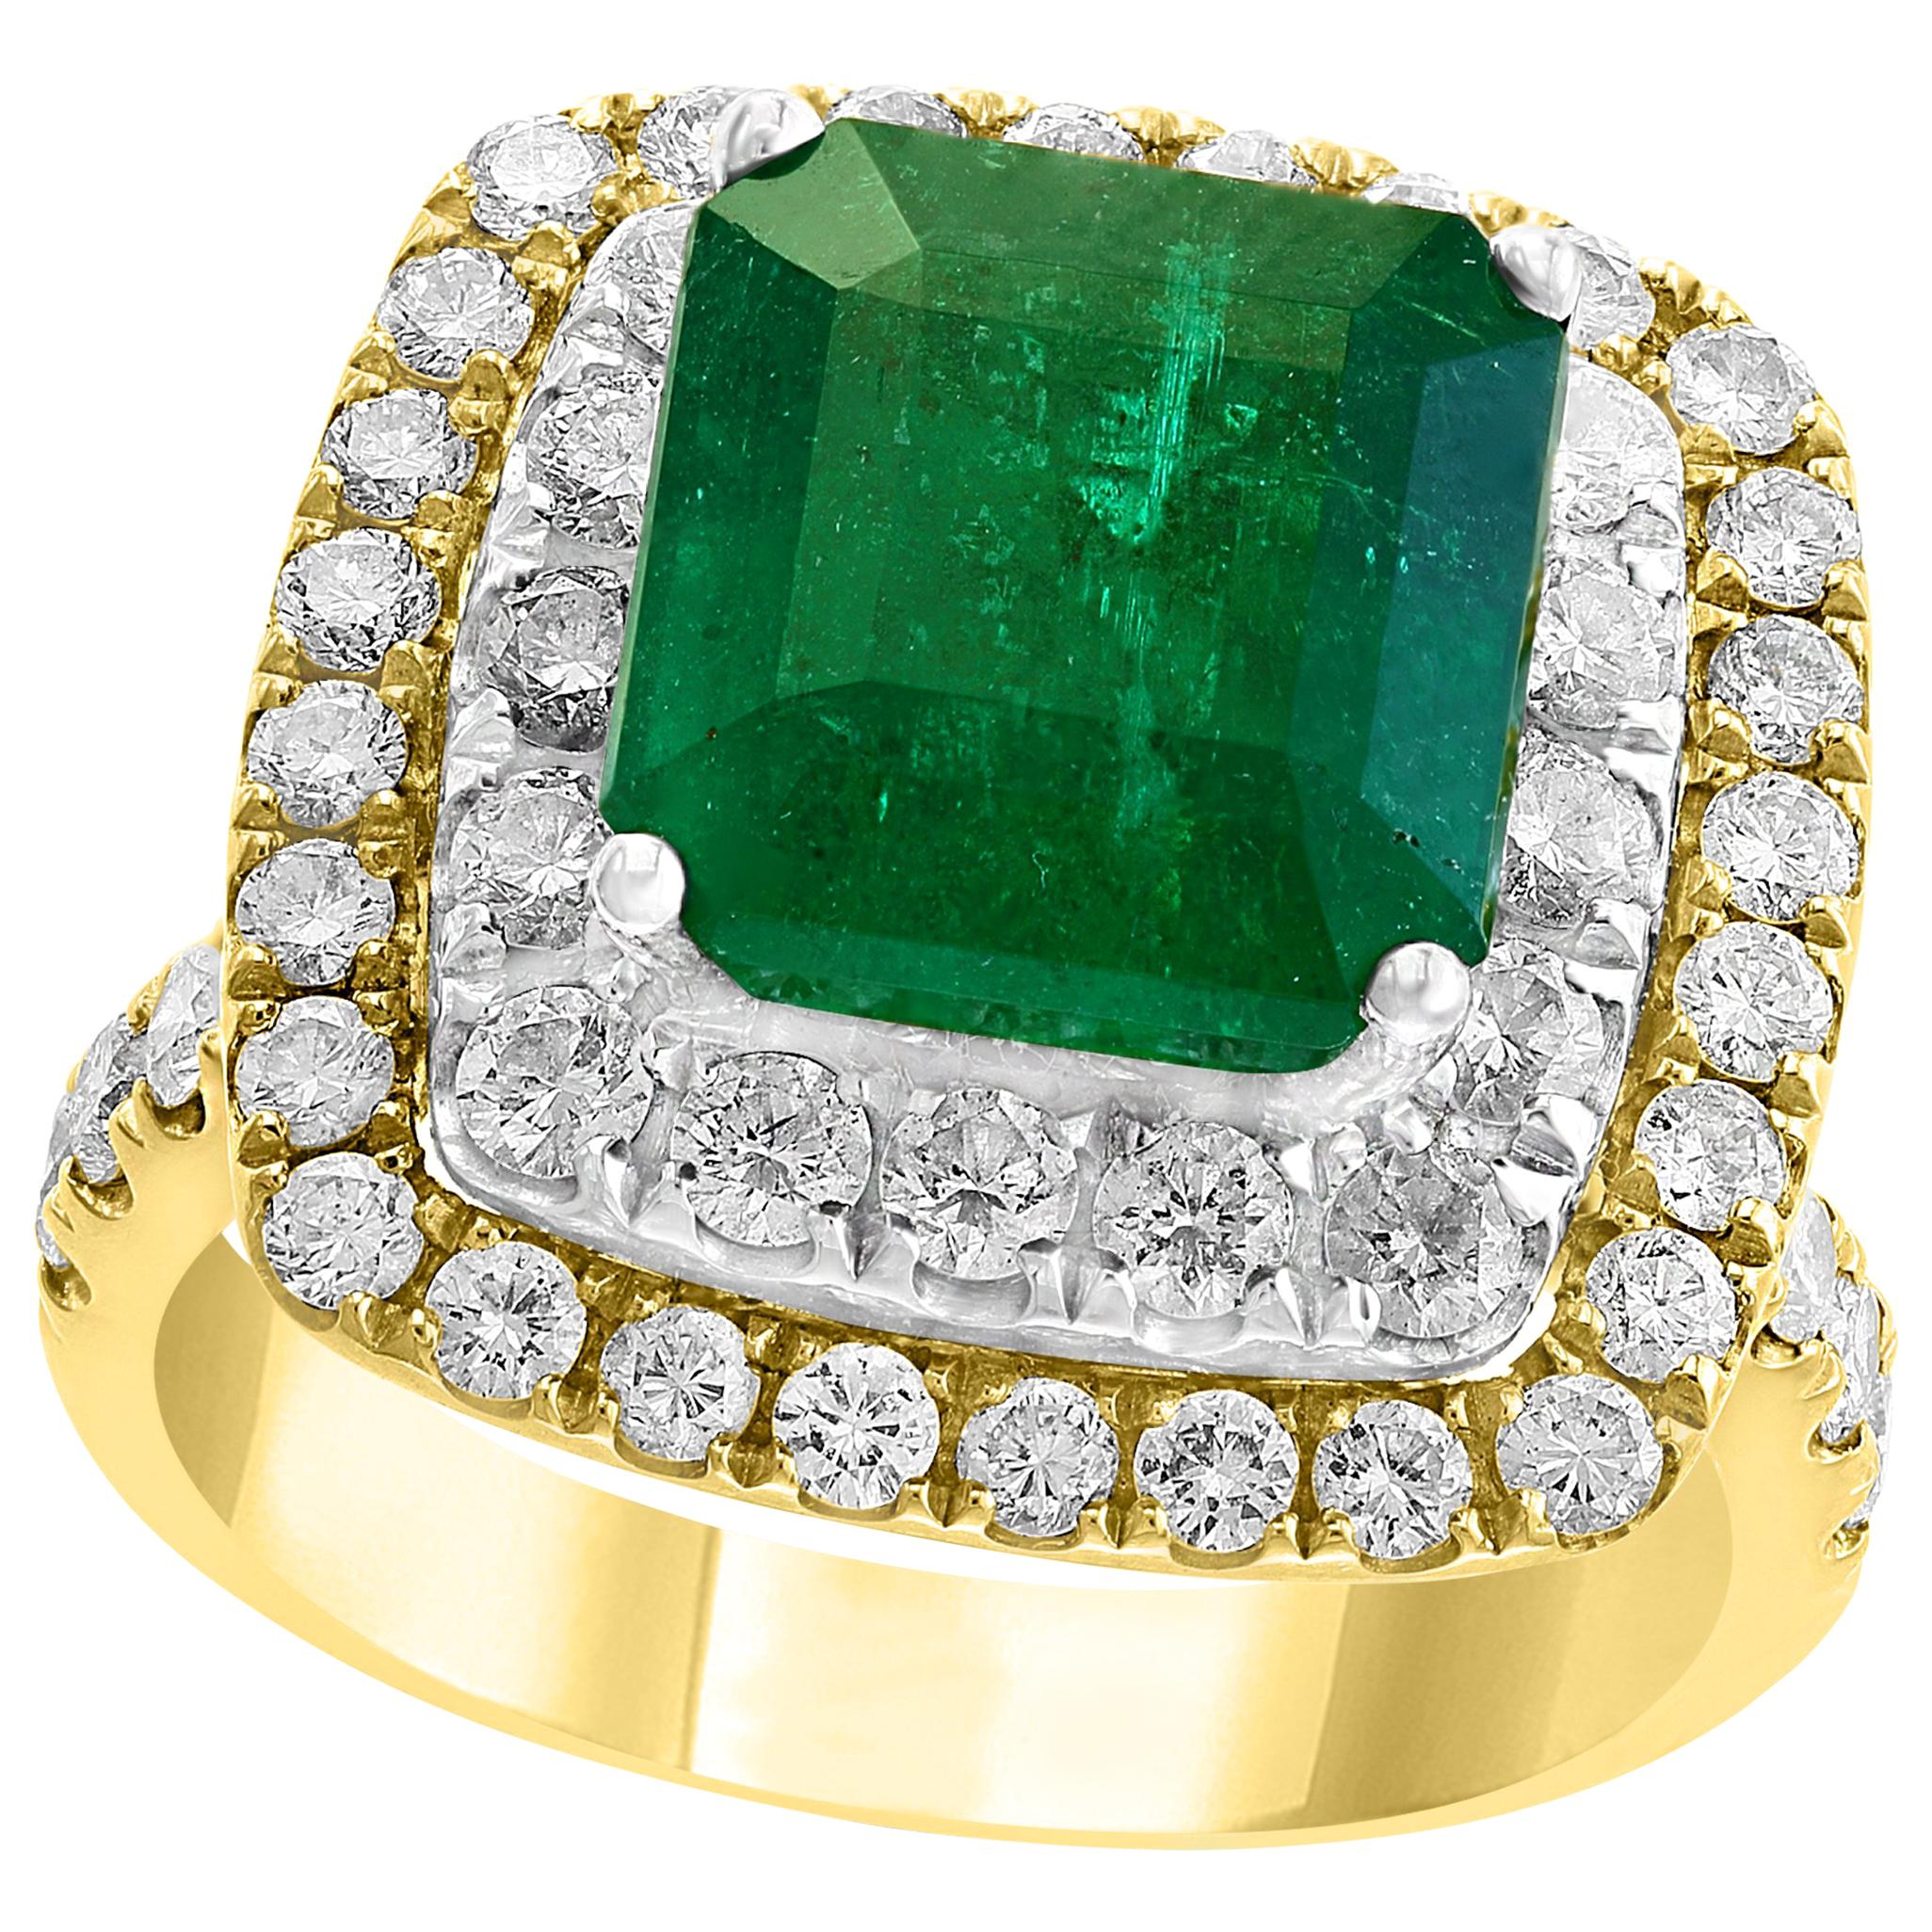 4.5 Carat Emerald Cut Colombian Emerald and Diamond Two-Tone 18 Karat Gold Ring